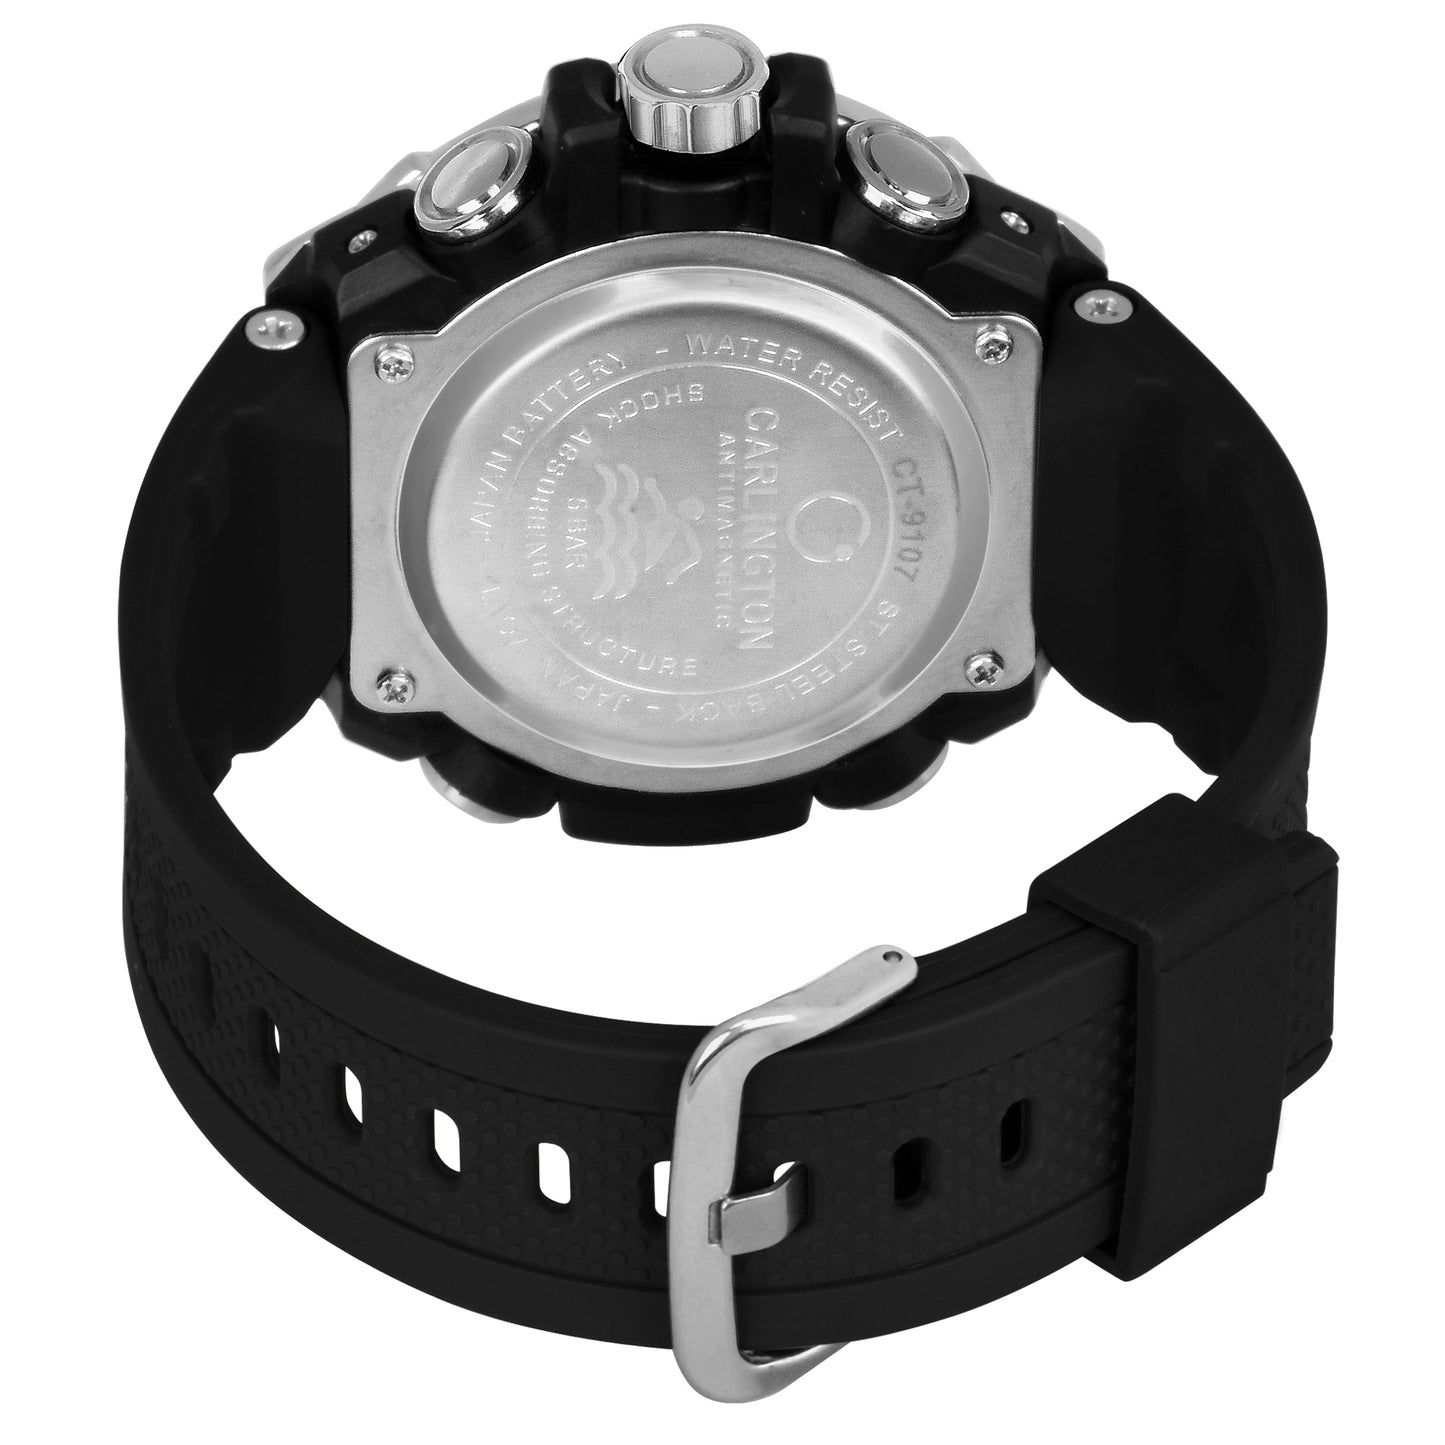 Carlington Analog-Digital Watch - 9107 Black